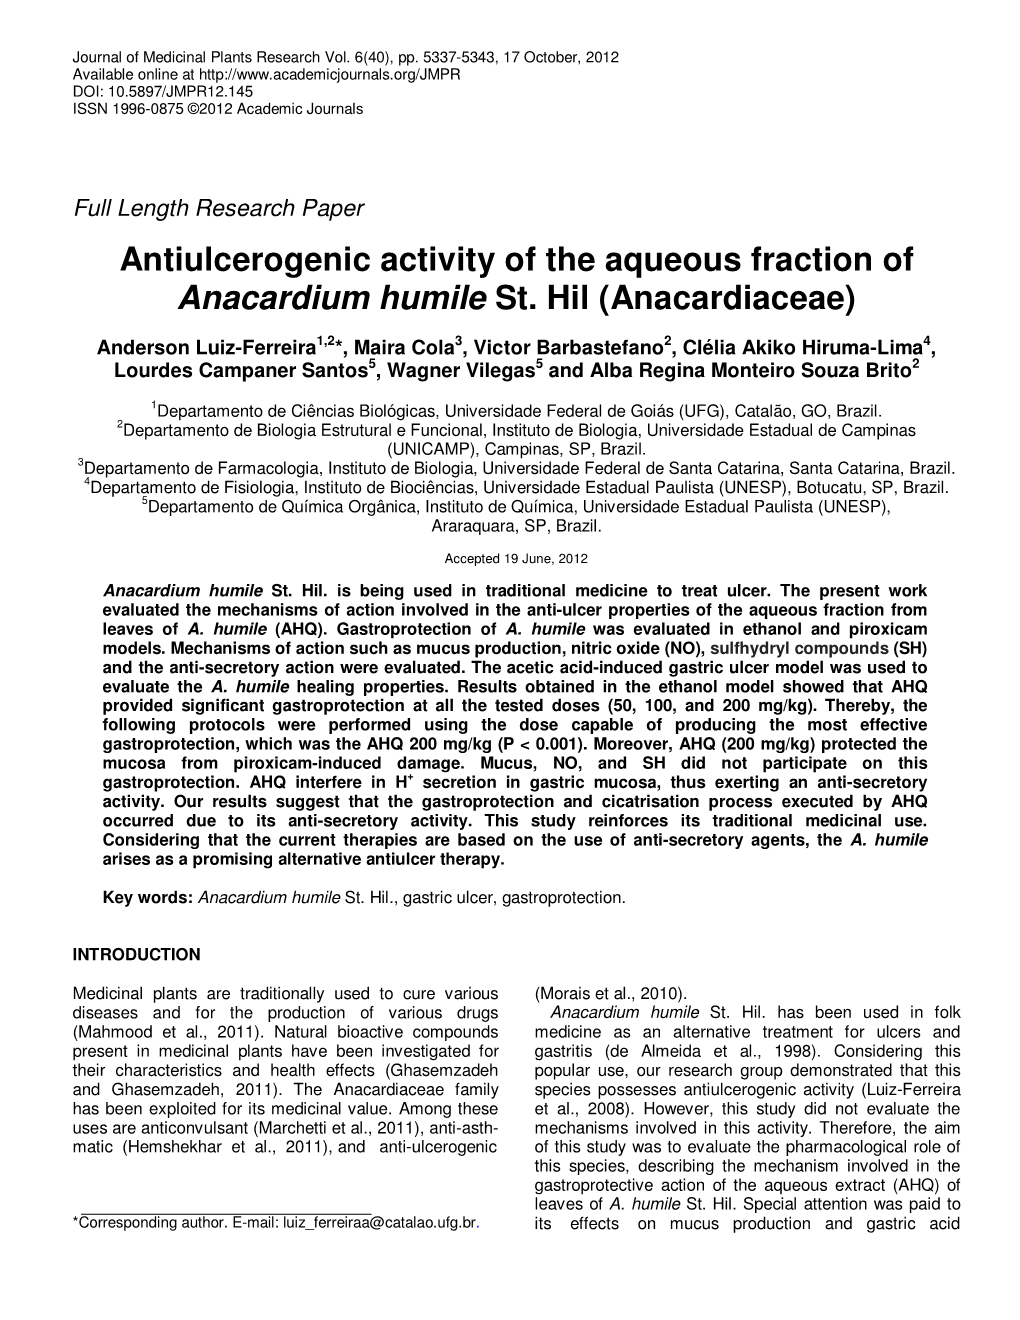 Antiulcerogenic Activity of the Aqueous Fraction of Anacardium Humile St